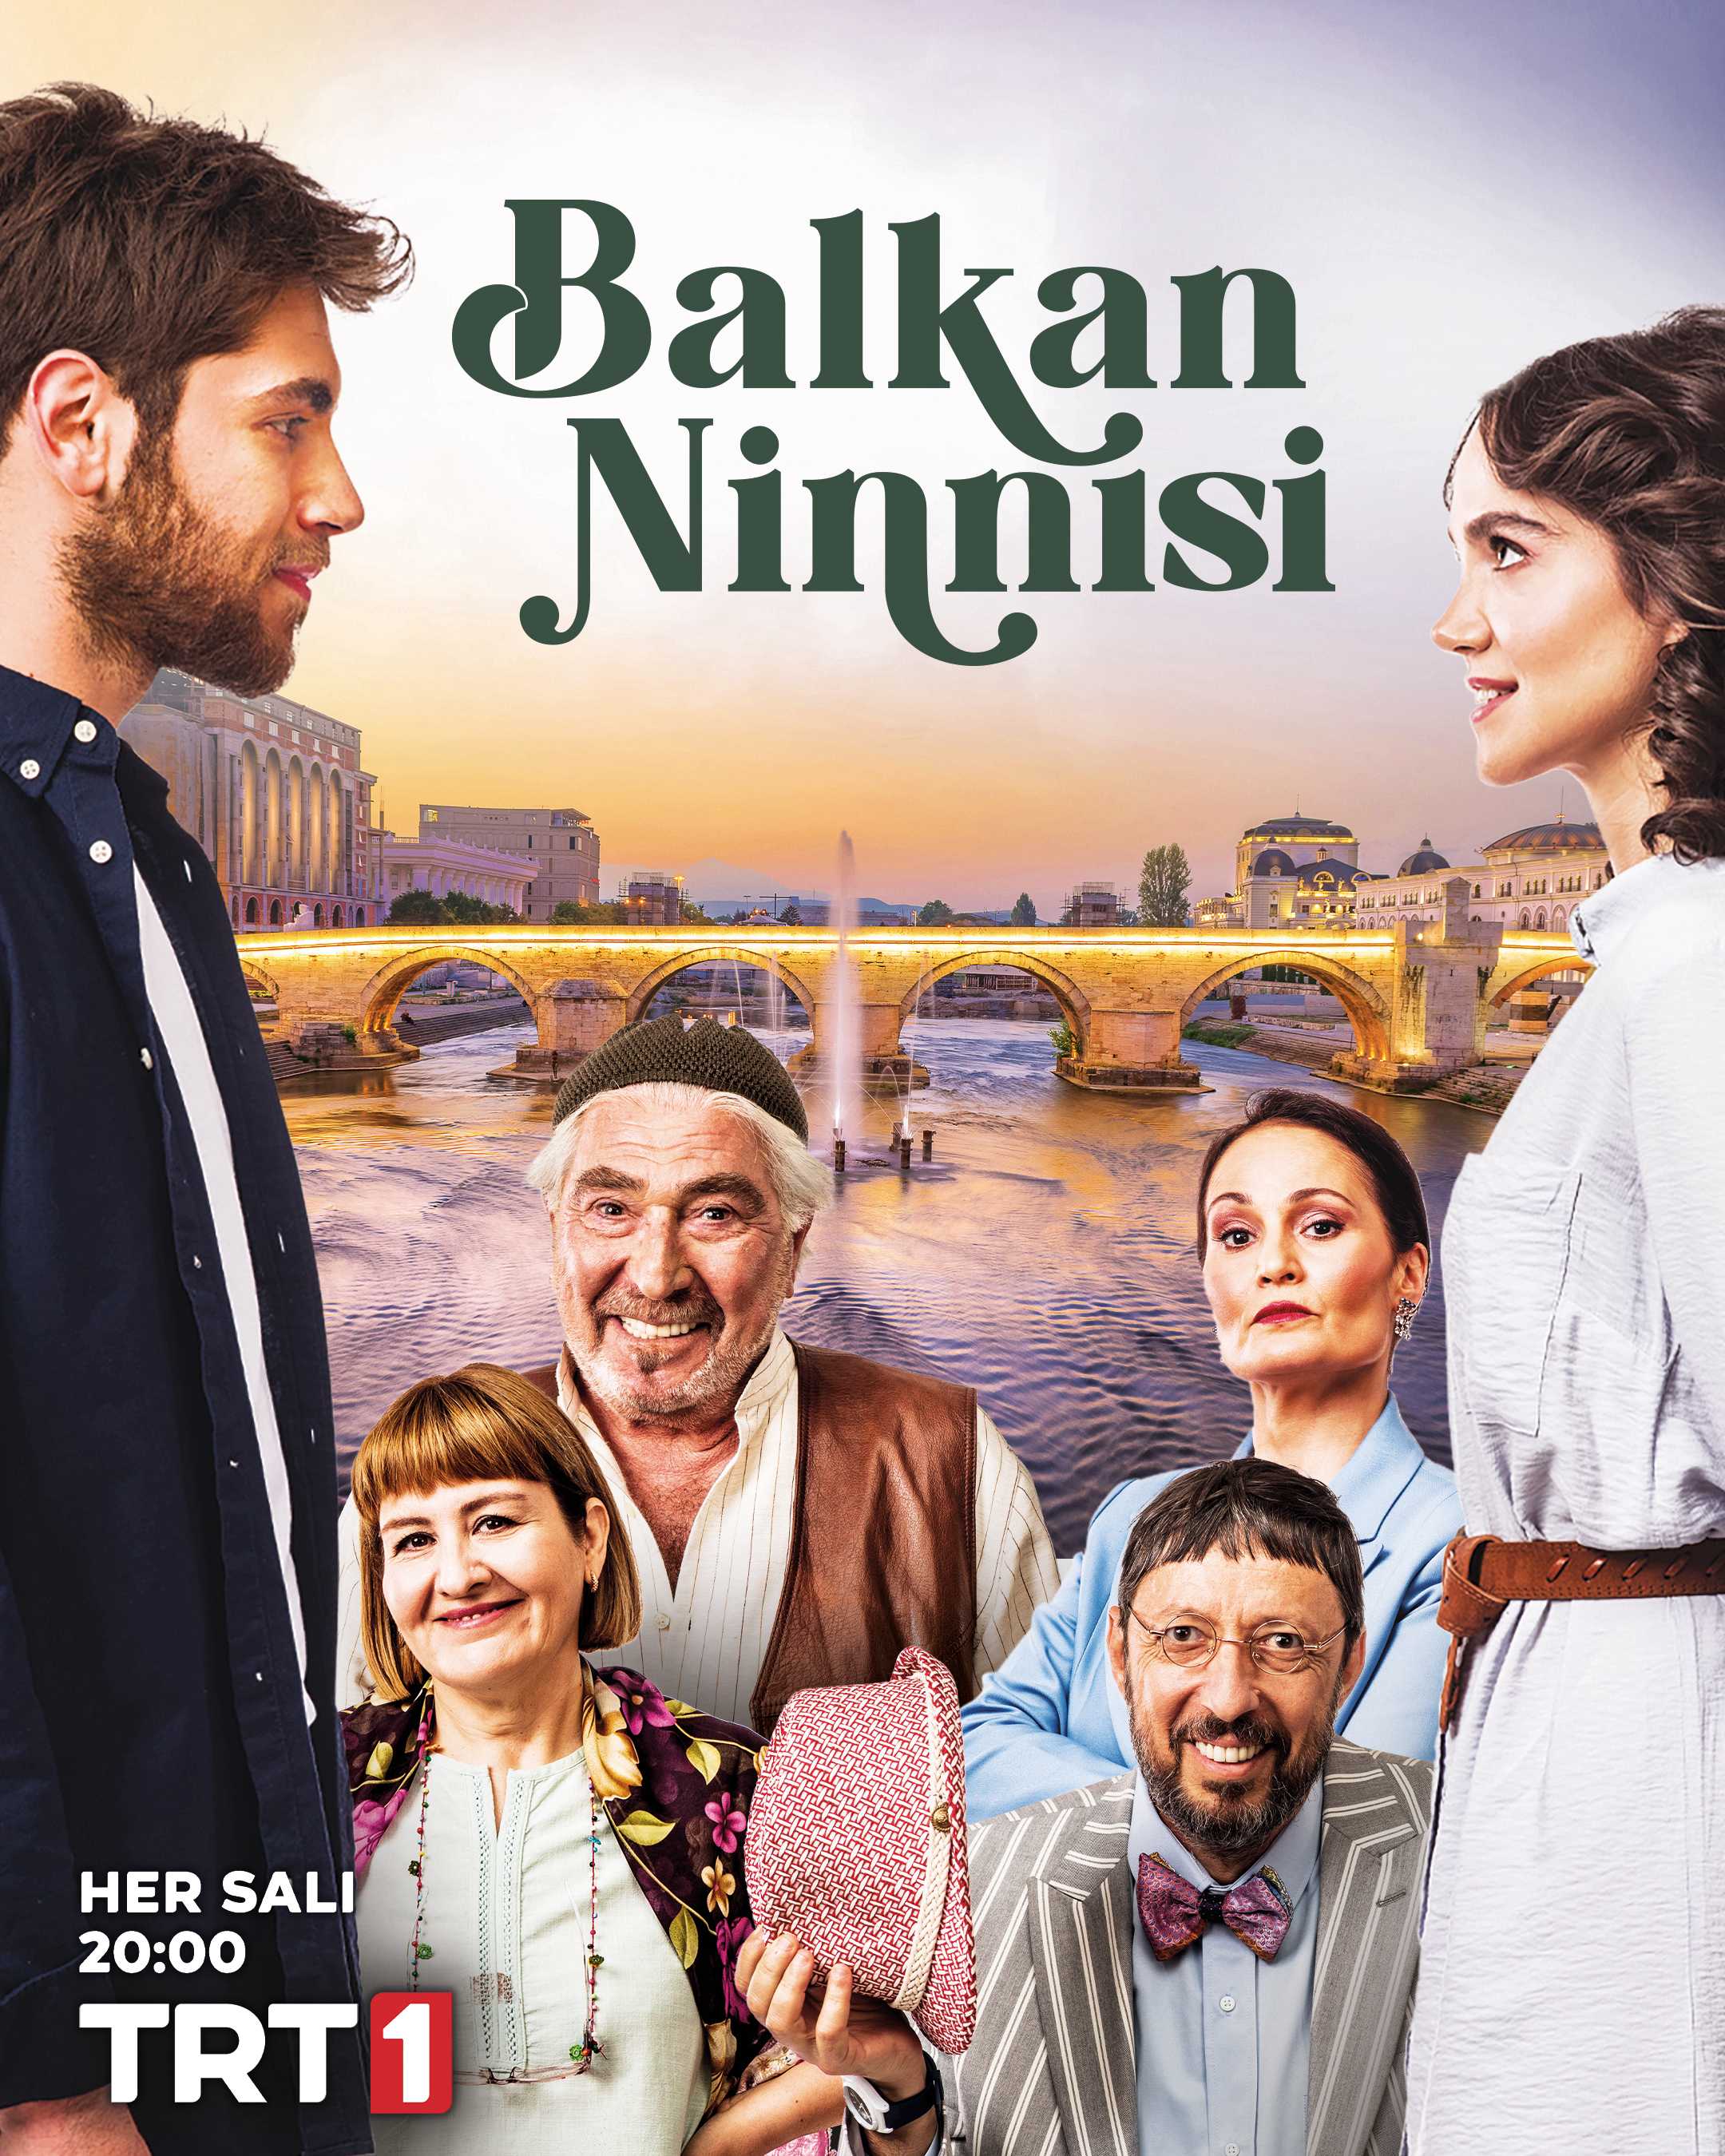 Balkan Ninnisi - Balkan Lullaby / Khúc hát ru vùng Balkan